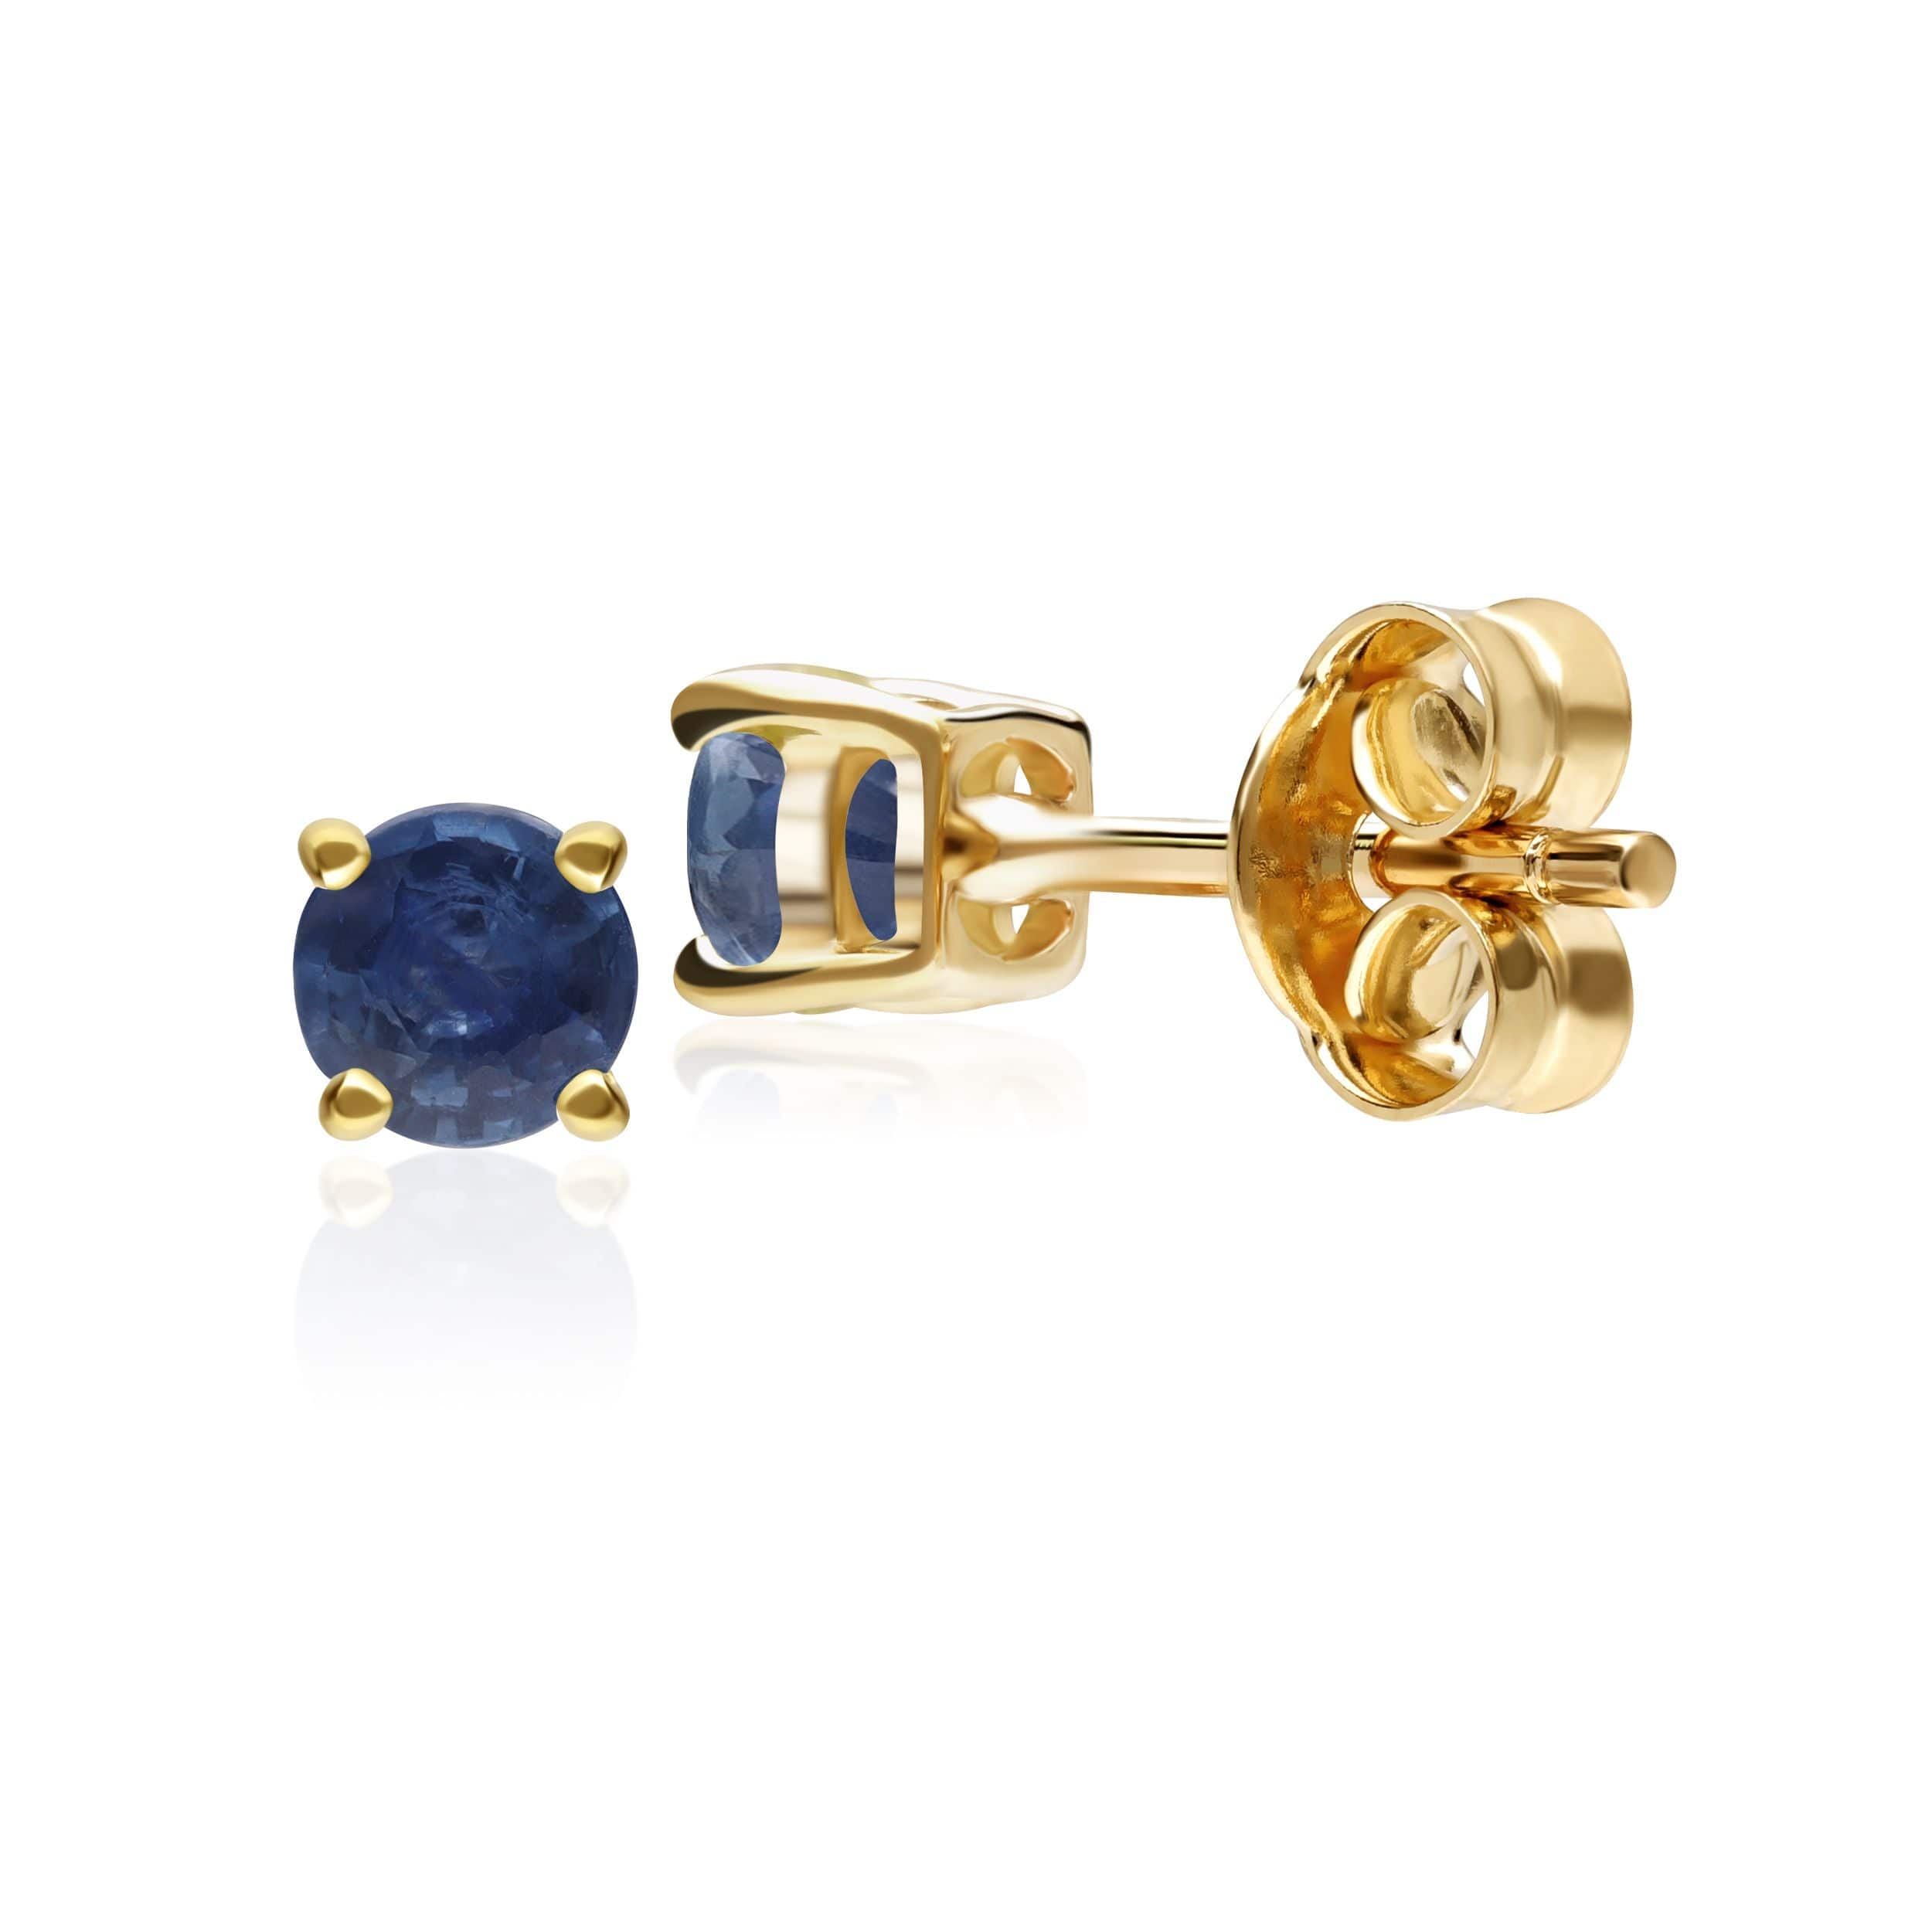 Classic Round Sapphire Stud Earrings in 9ct Yellow Gold 3.5mm - Gemondo